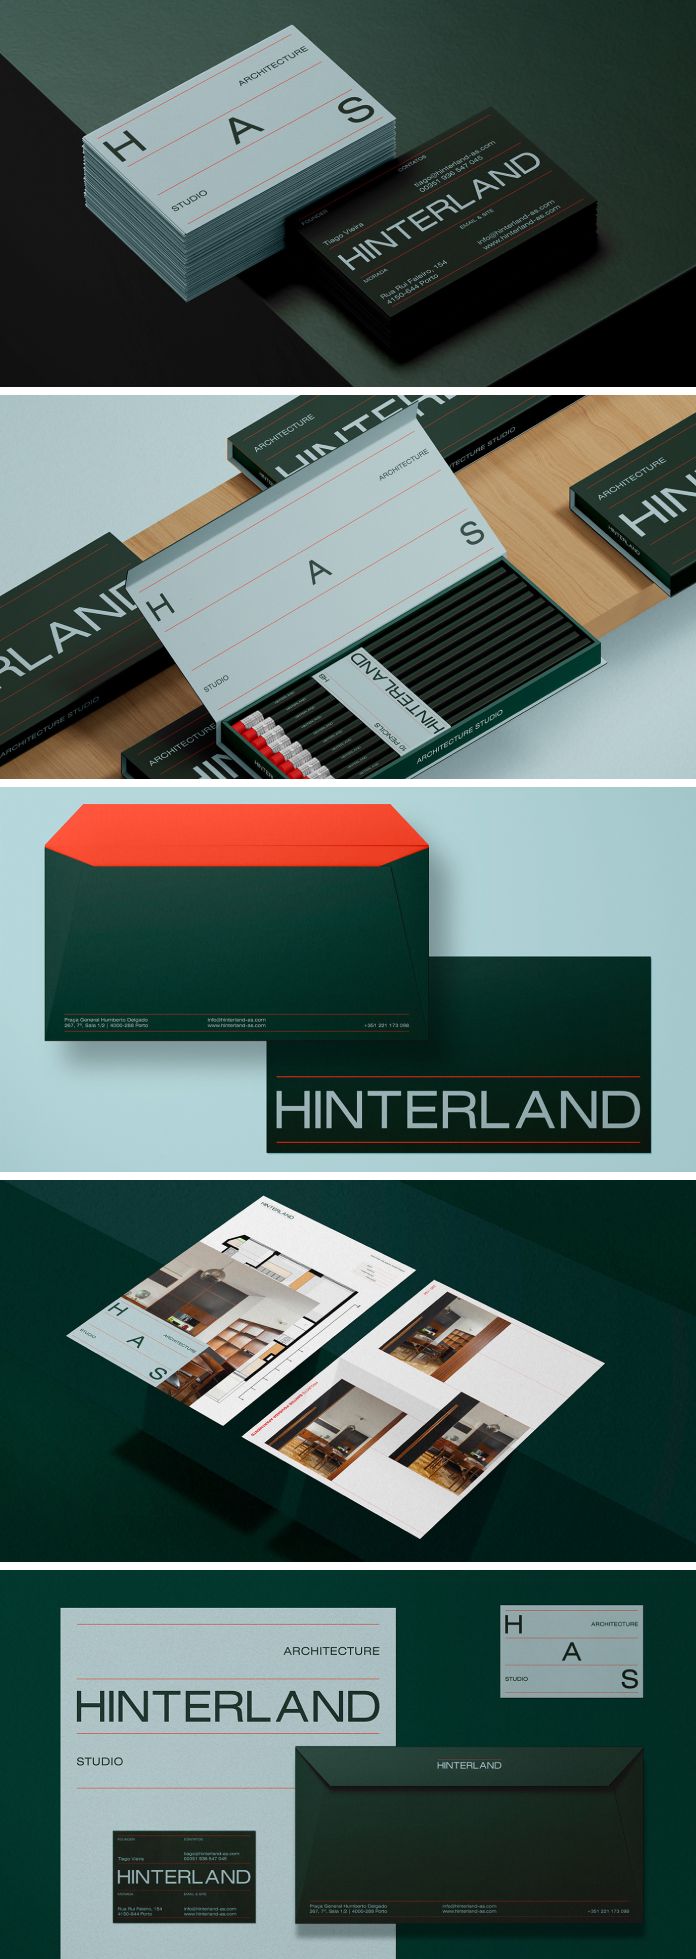 Hinterland Branding by Mano a Mano